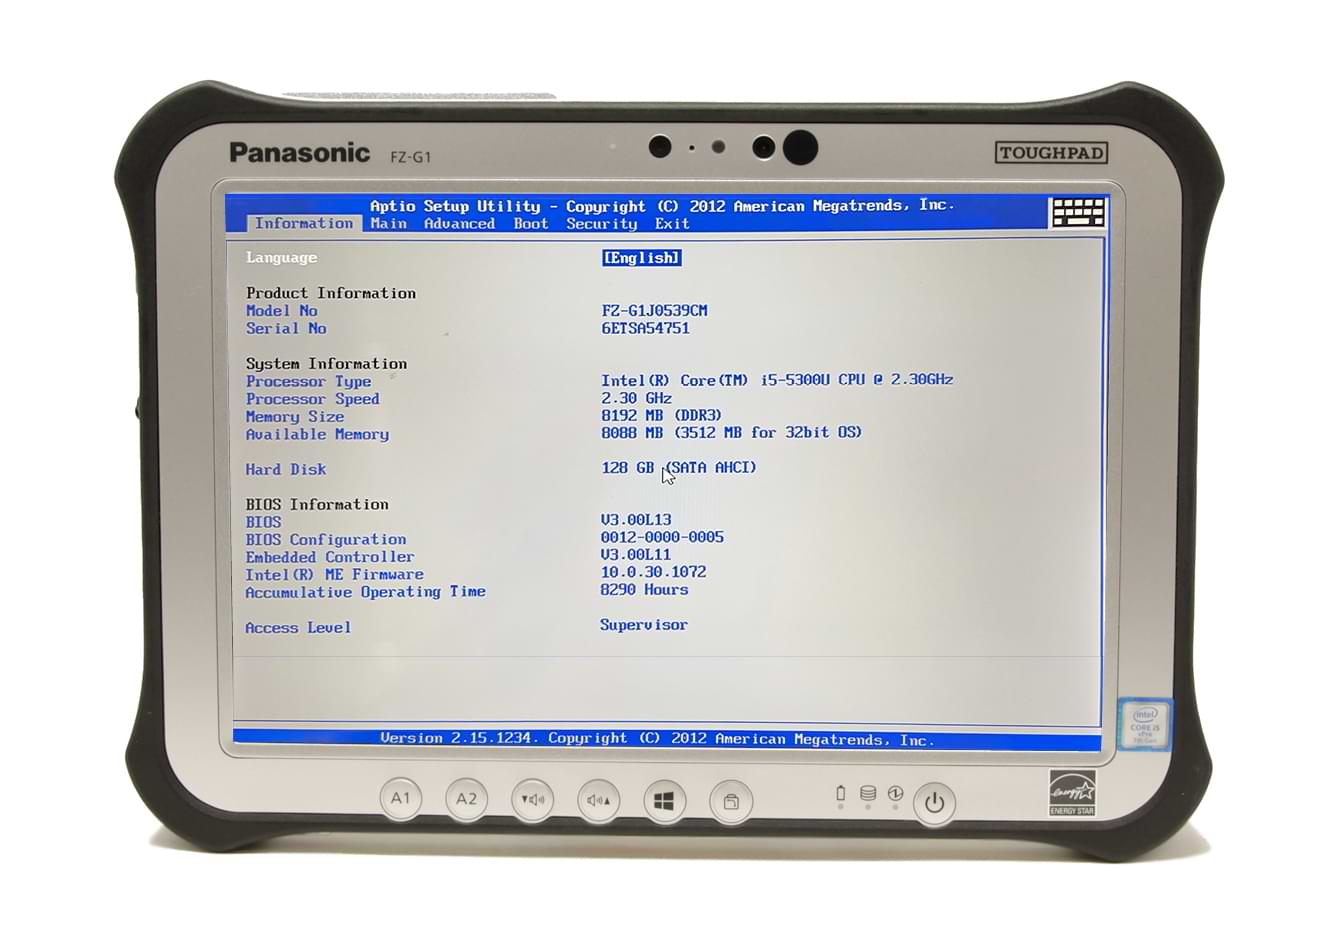 The Panasonic Toughpad FZ-G1 in its BIOS